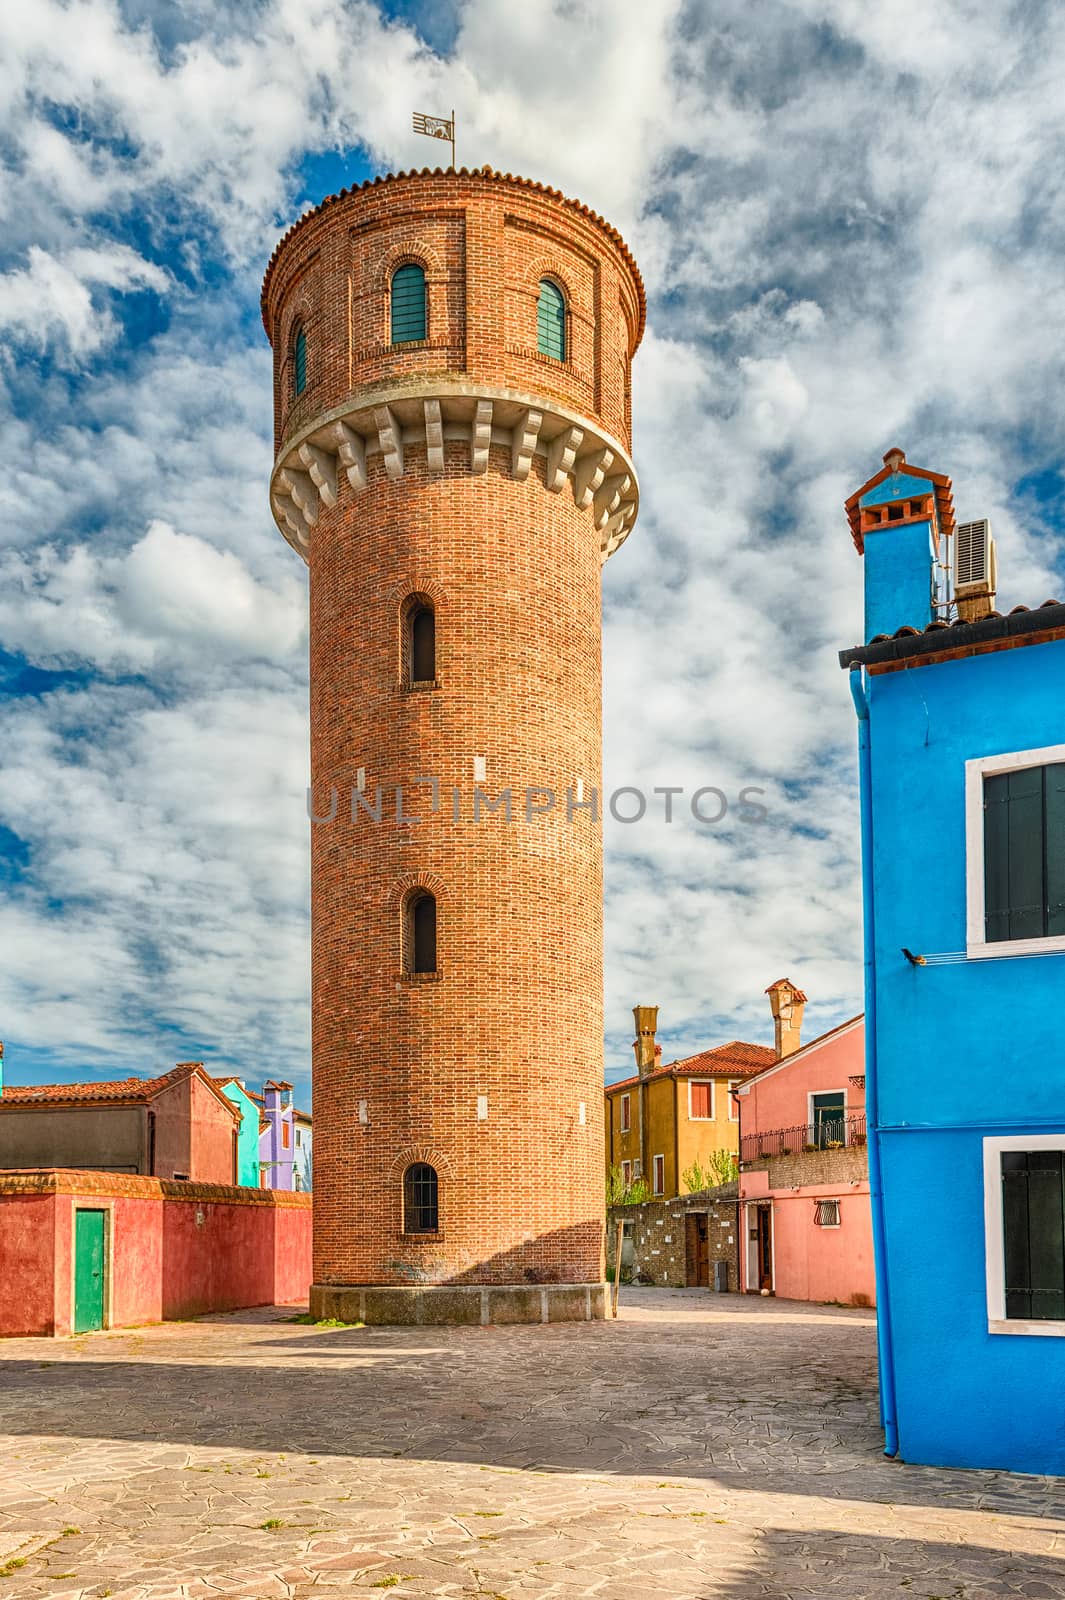 Water tower on the island of Burano, Venice, Italy by marcorubino